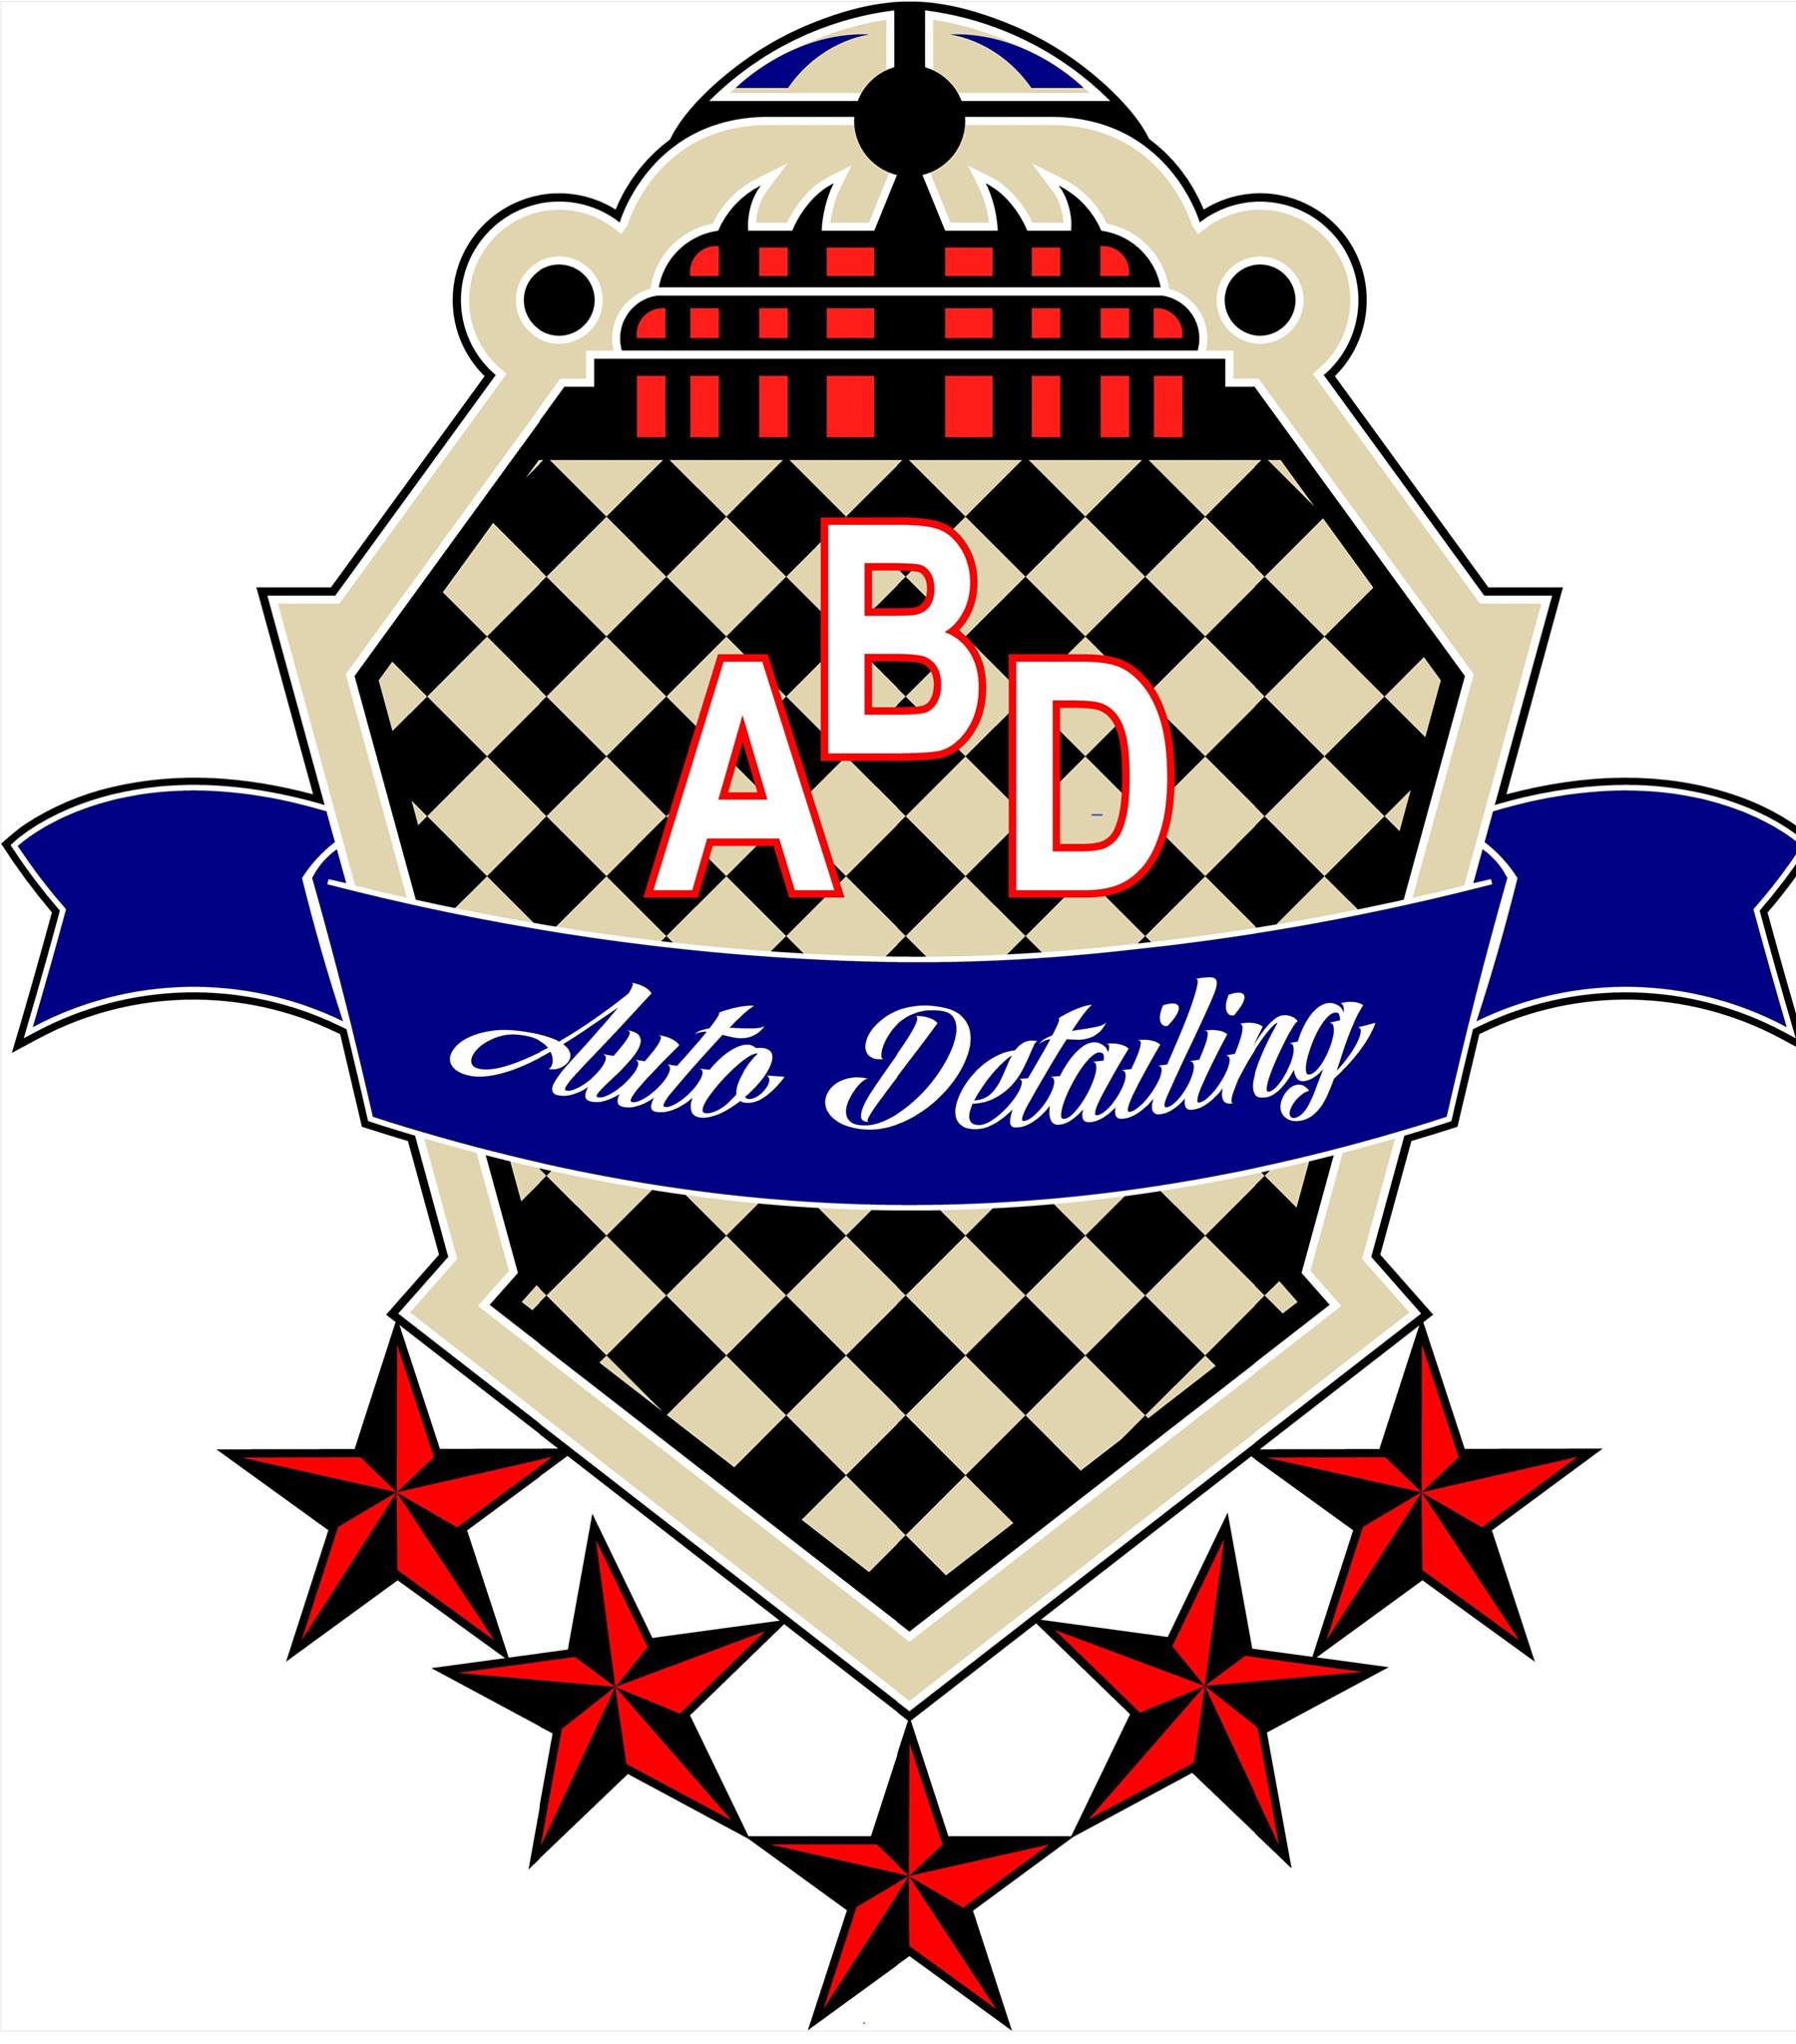 ABD Auto Detailing, LLC